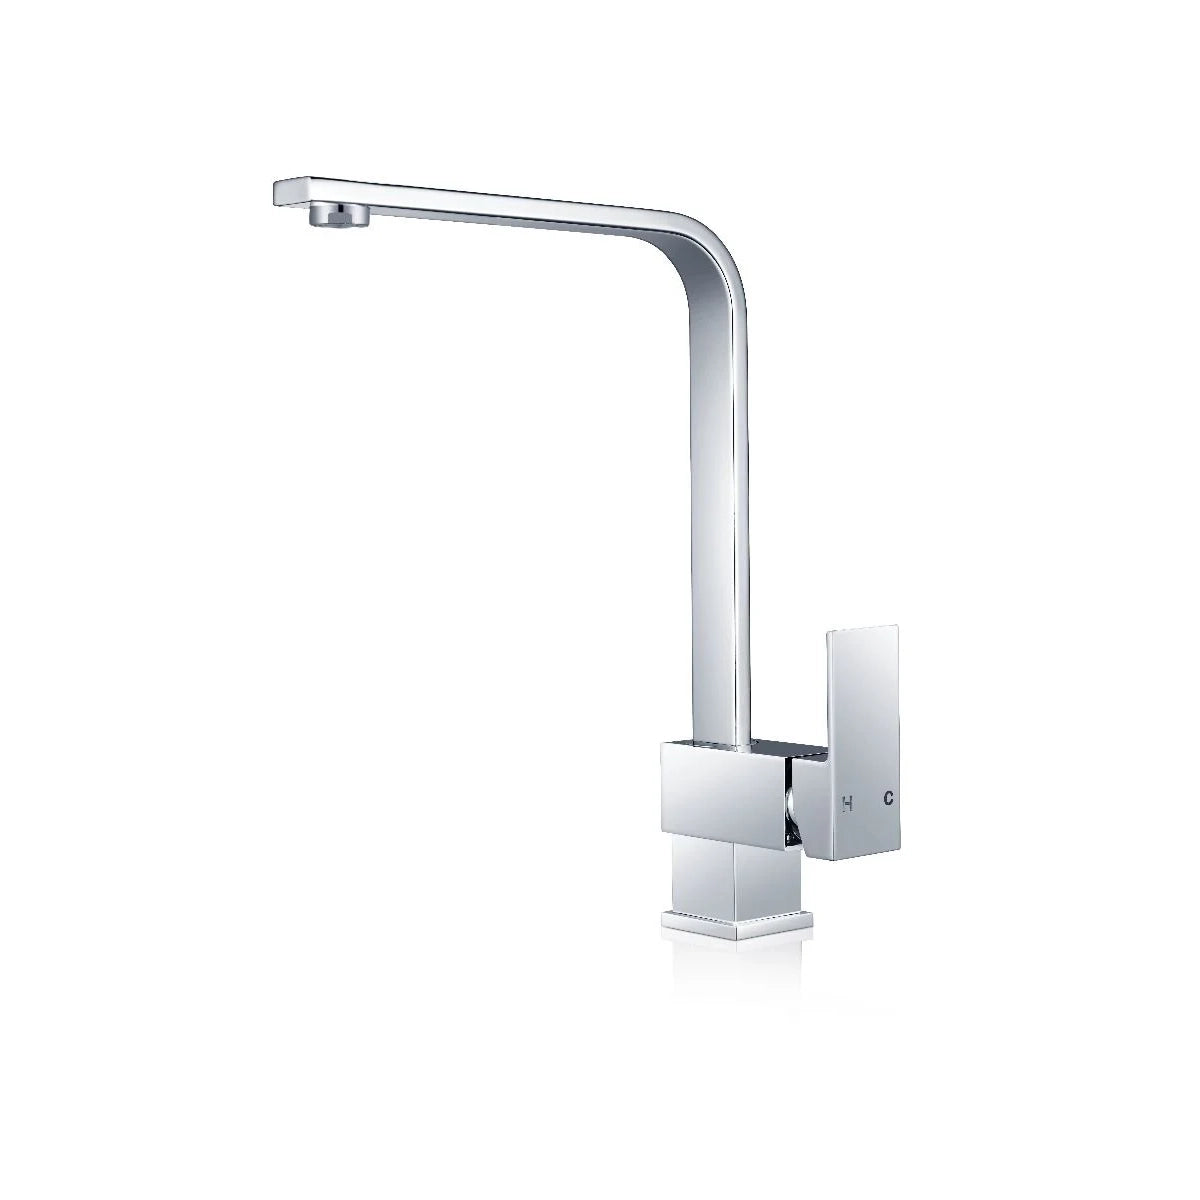 Kitchen sink mixer tap - 1010.KM: Modern design for stylish functionality-CH1010.KM